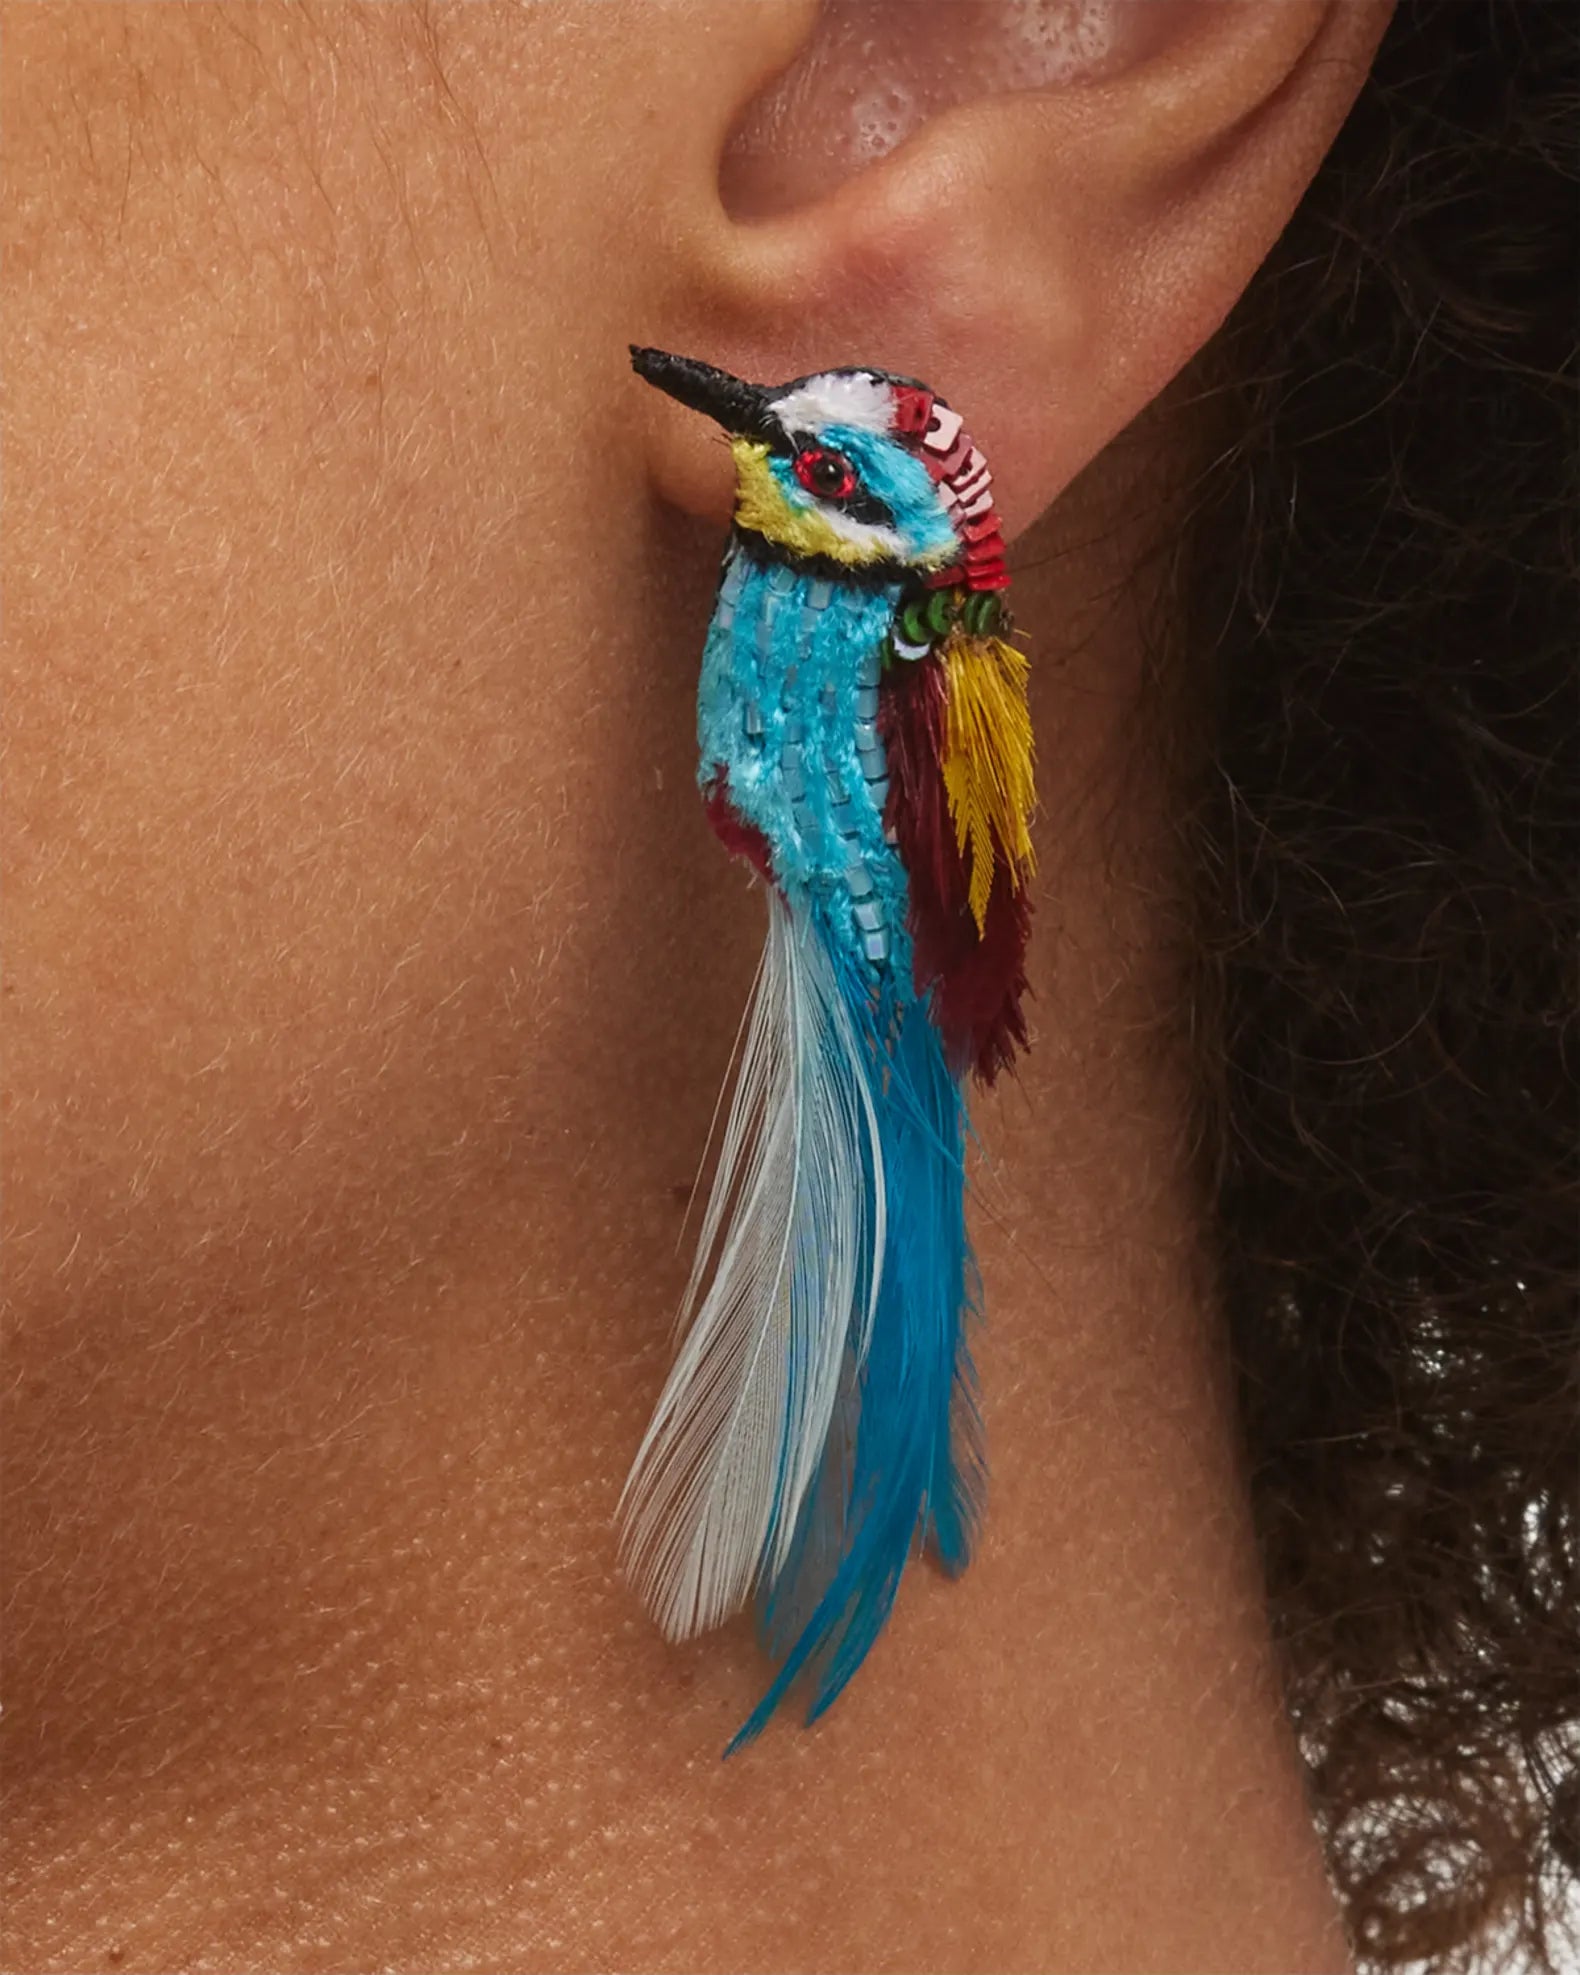 Piccola Hummingbird Earrings